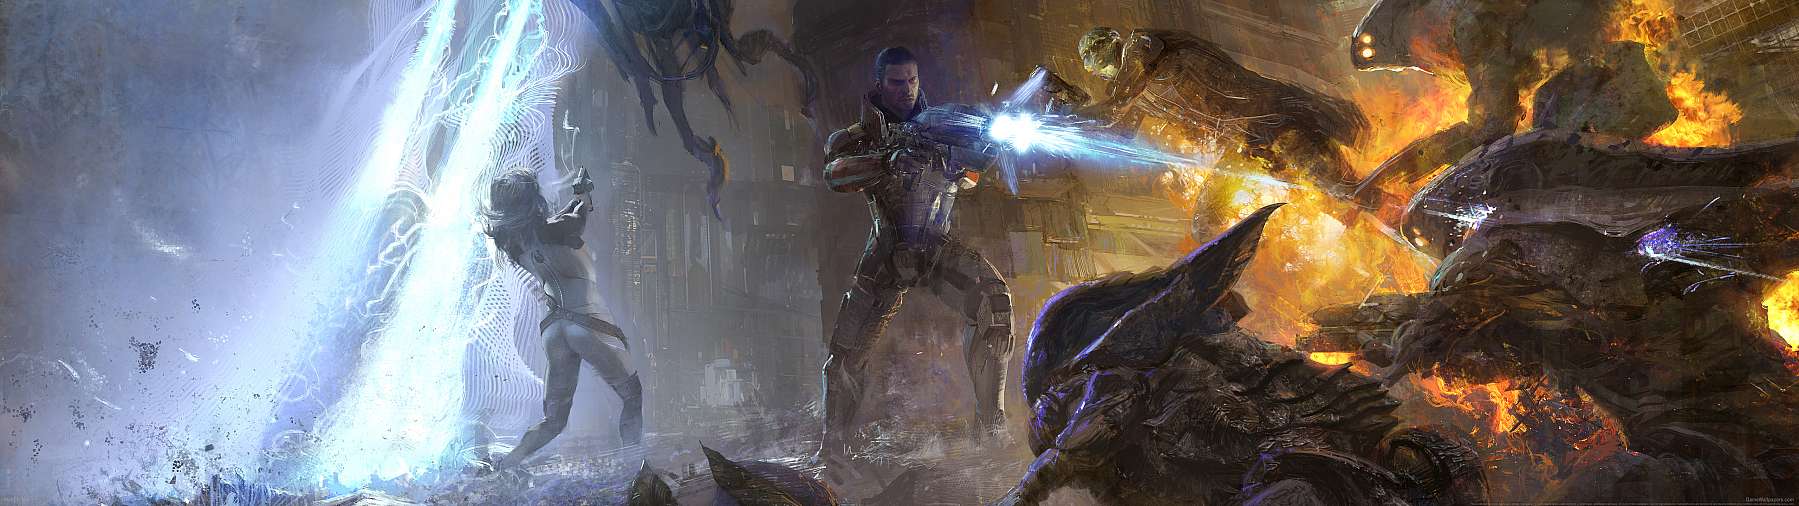 Mass Effect 2 superwide achtergrond 09